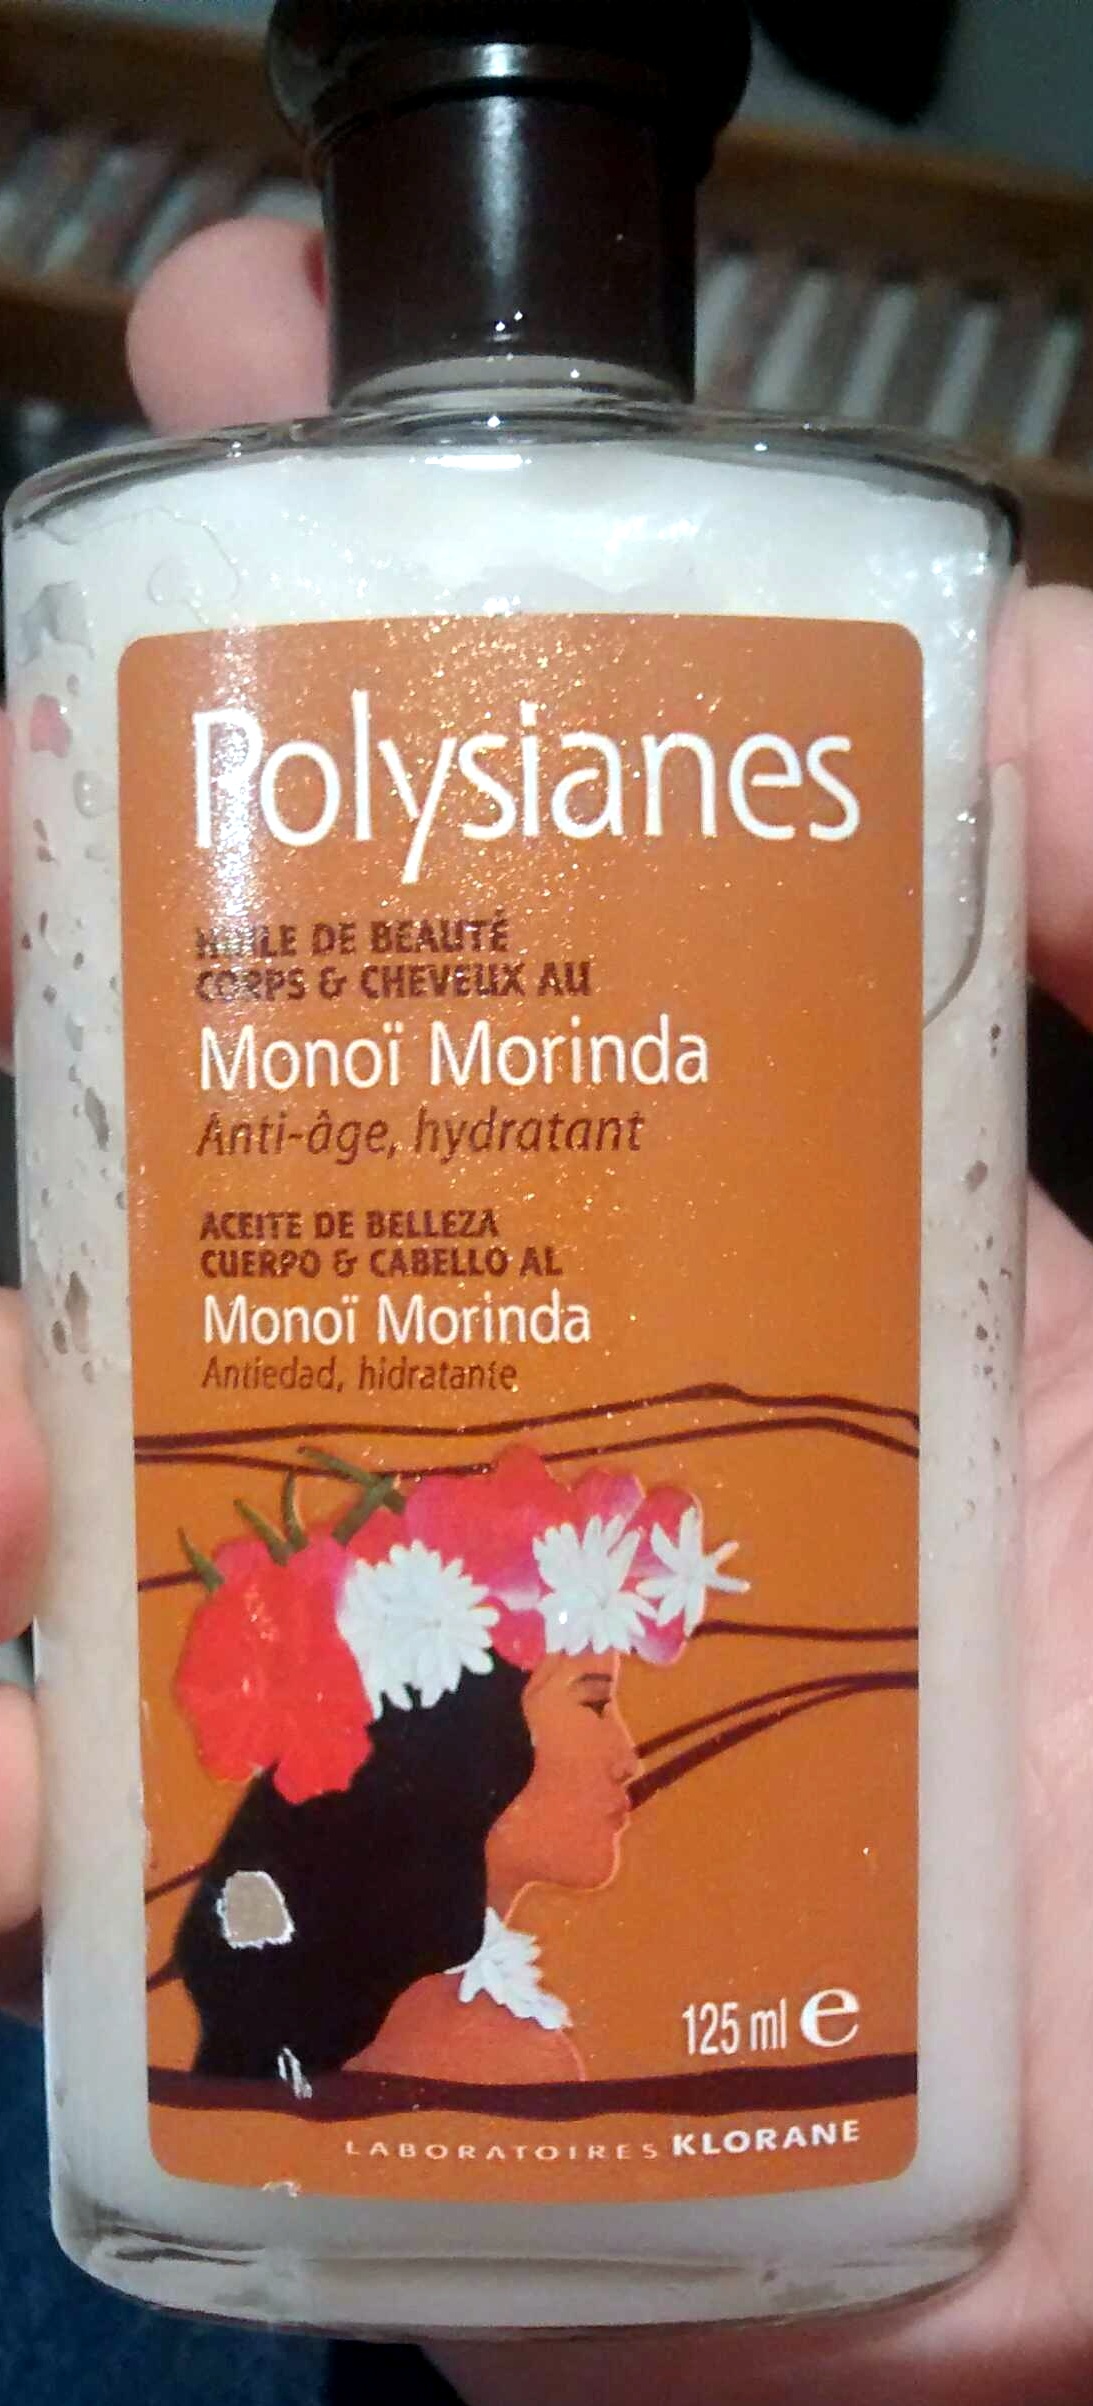 Polysianes Huile de beauté Monoi morinda - Produit - fr